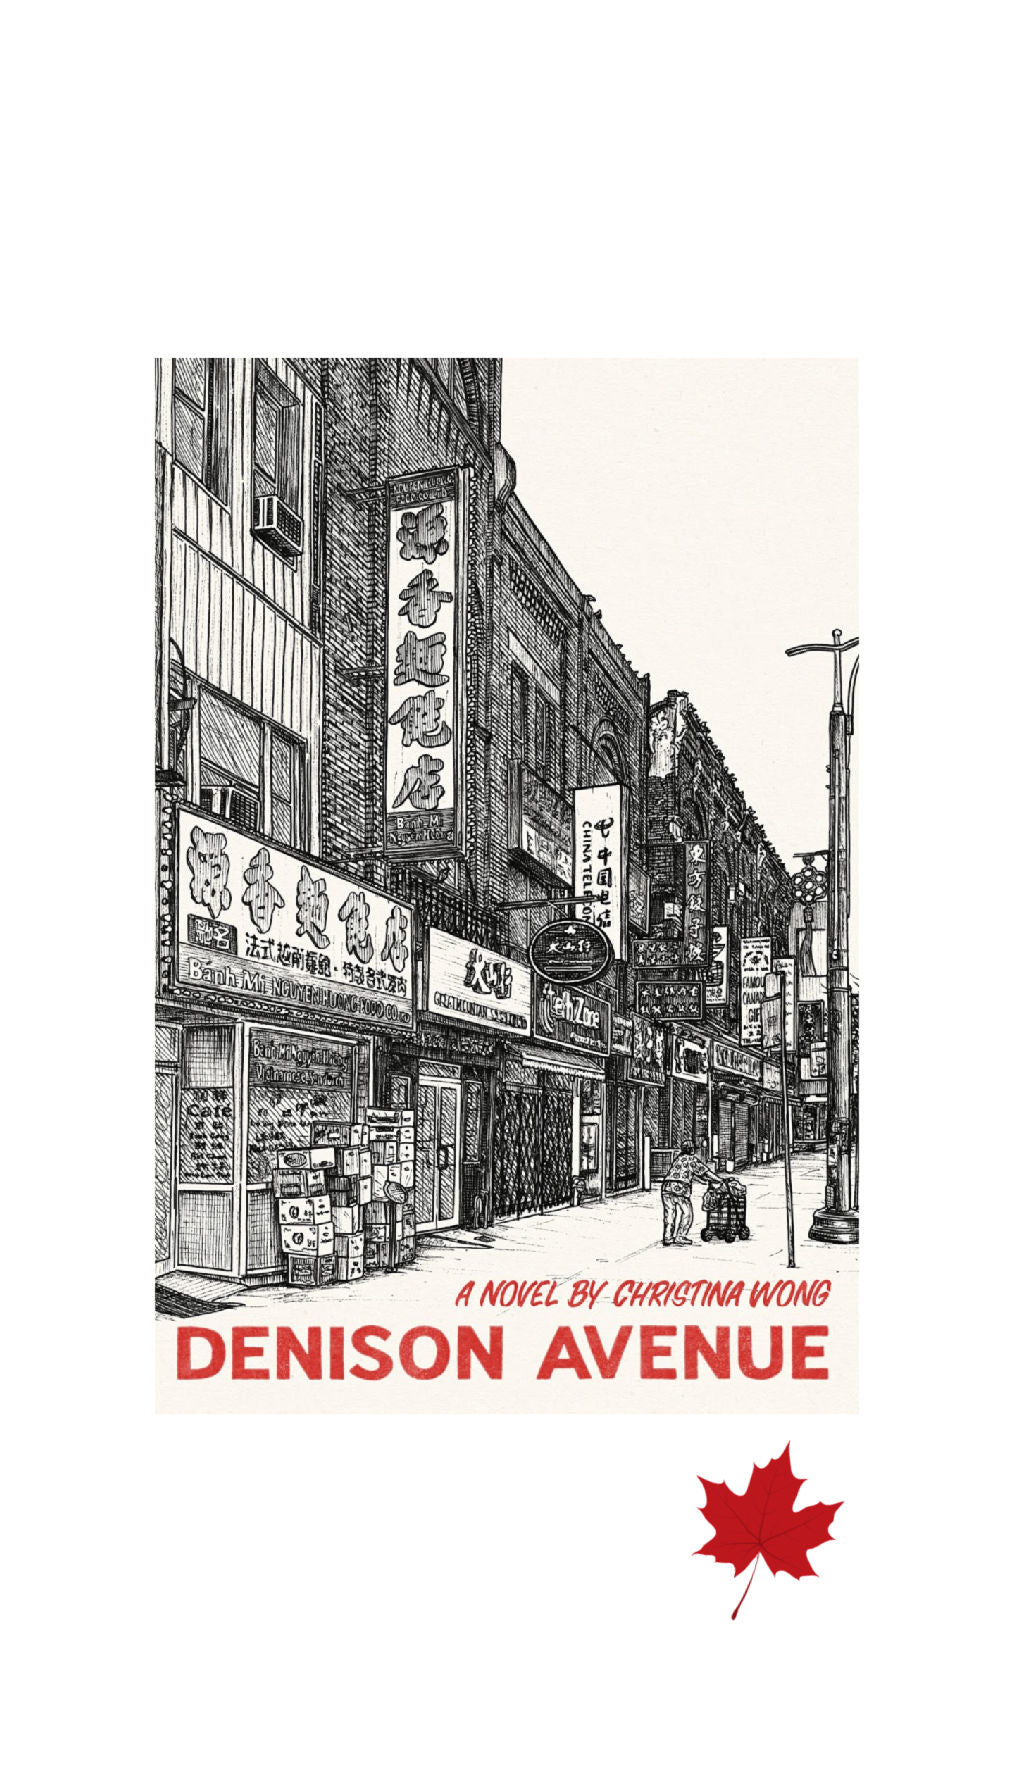 Denison Avenue